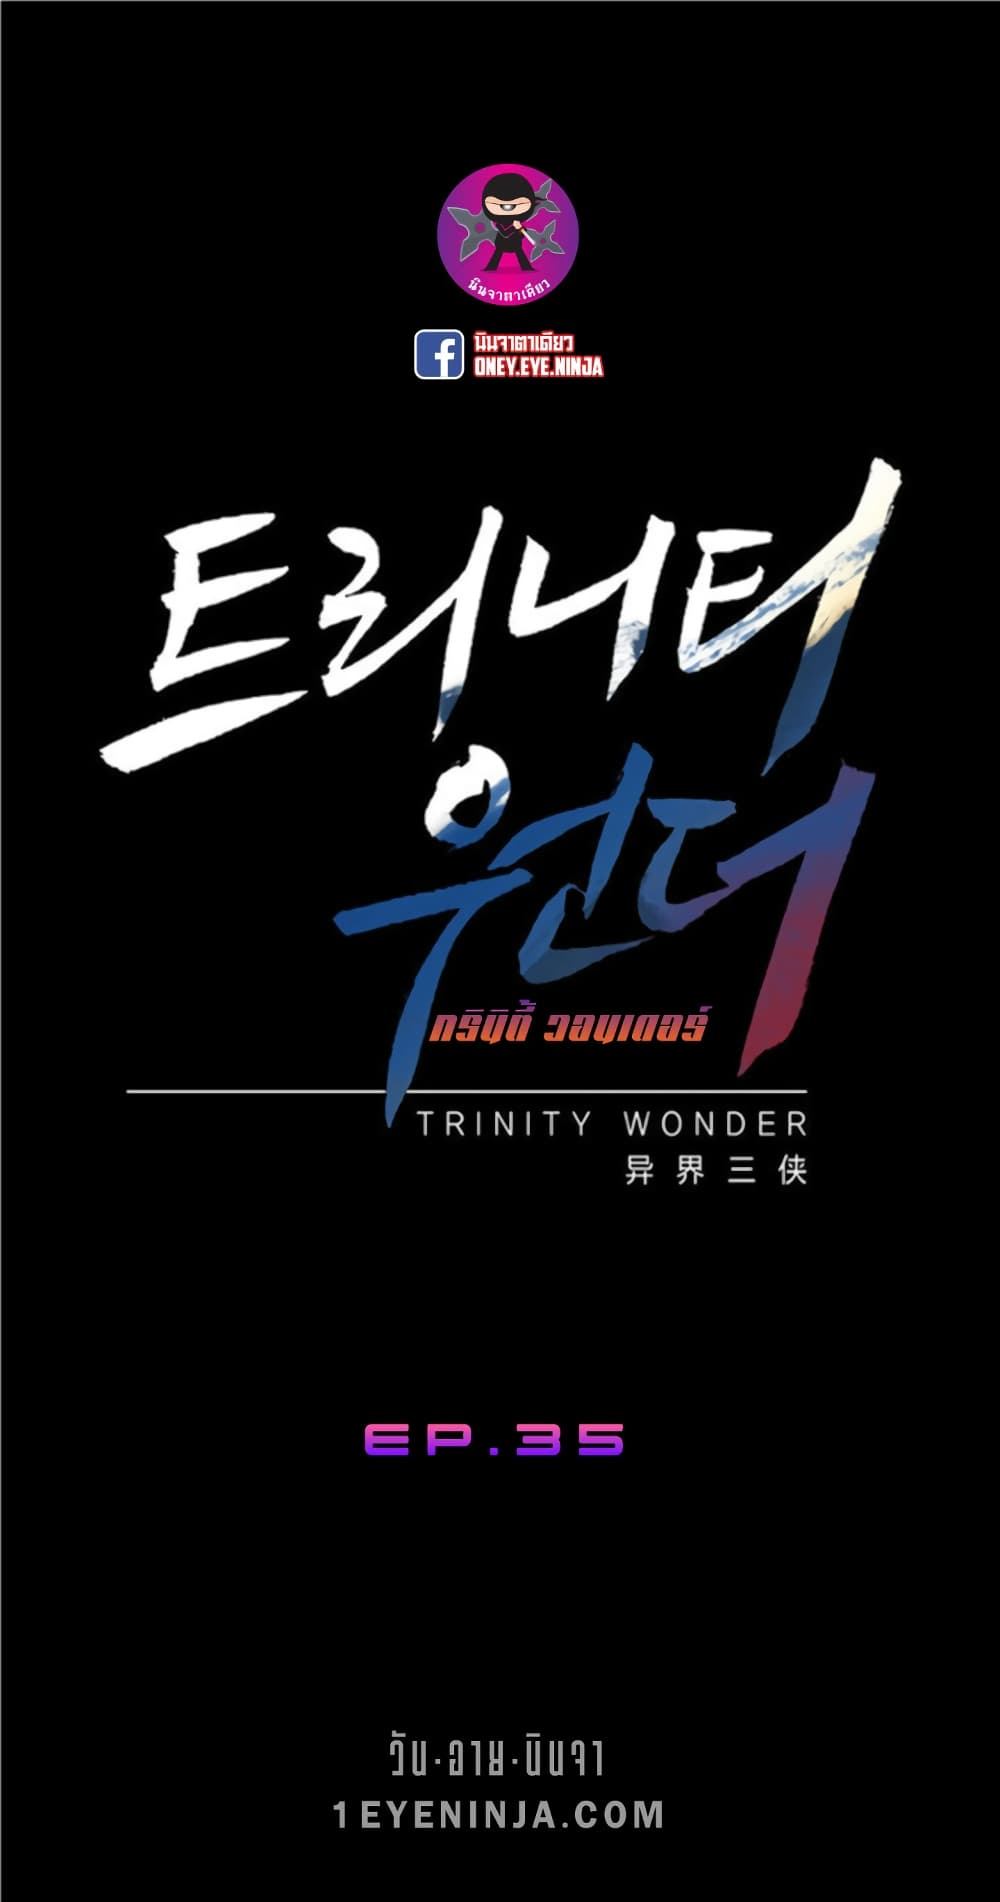 Trinity Wonder 35-35